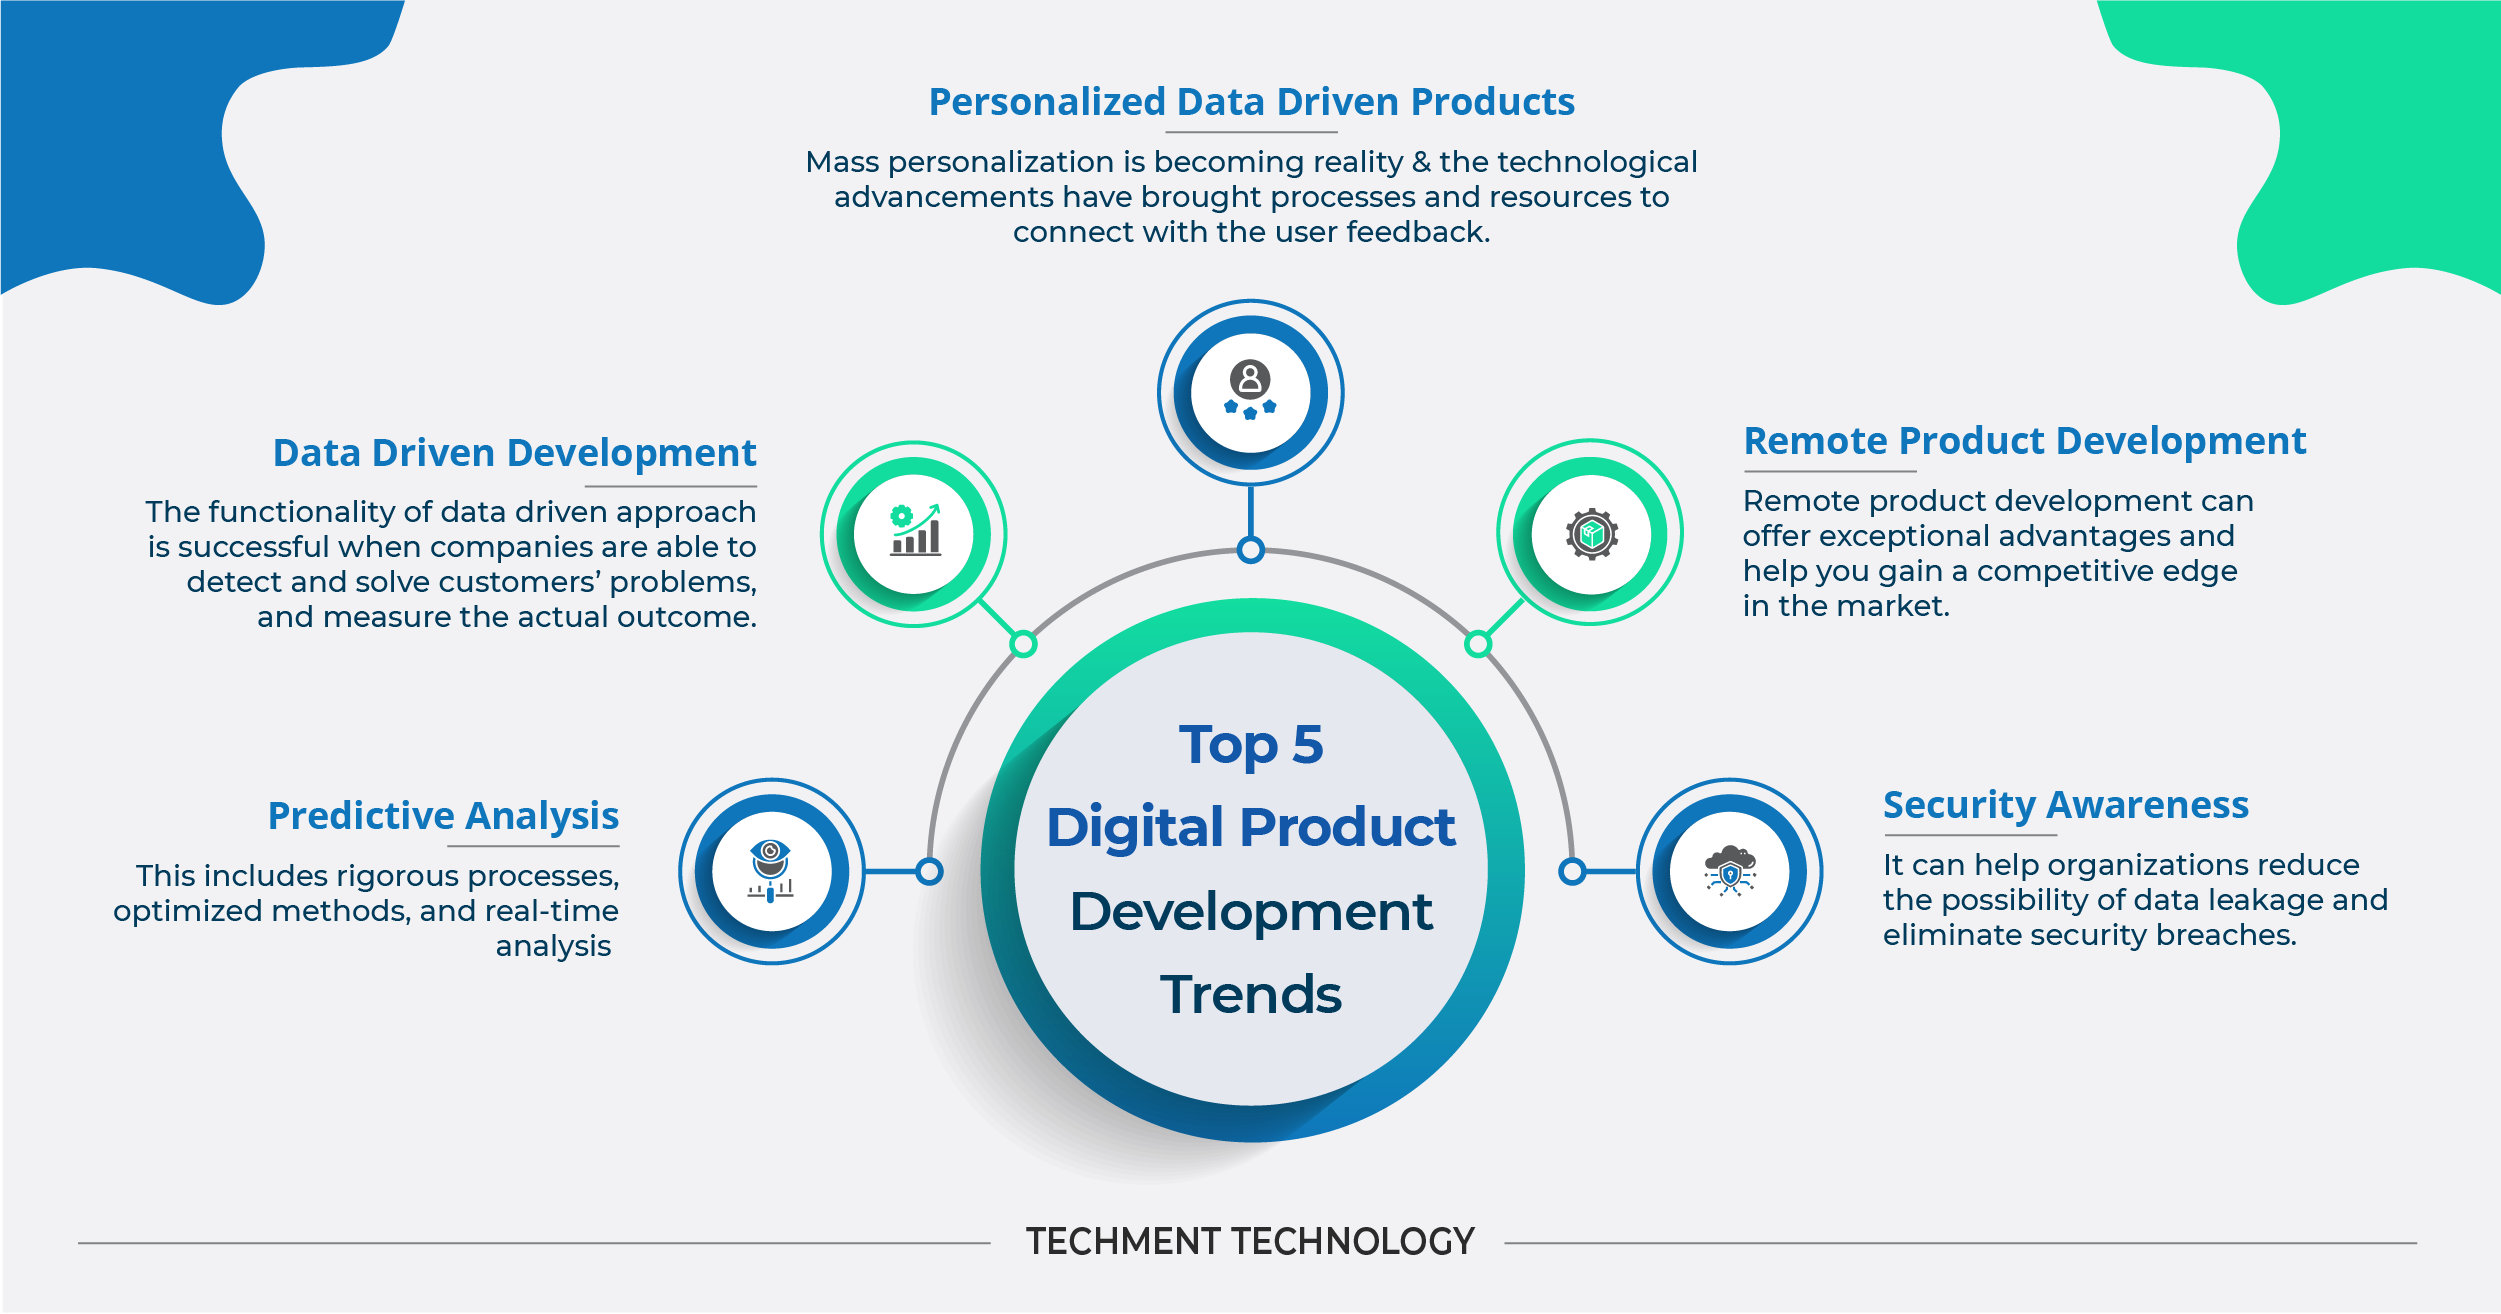 Top 5 Digital Product Development Trends